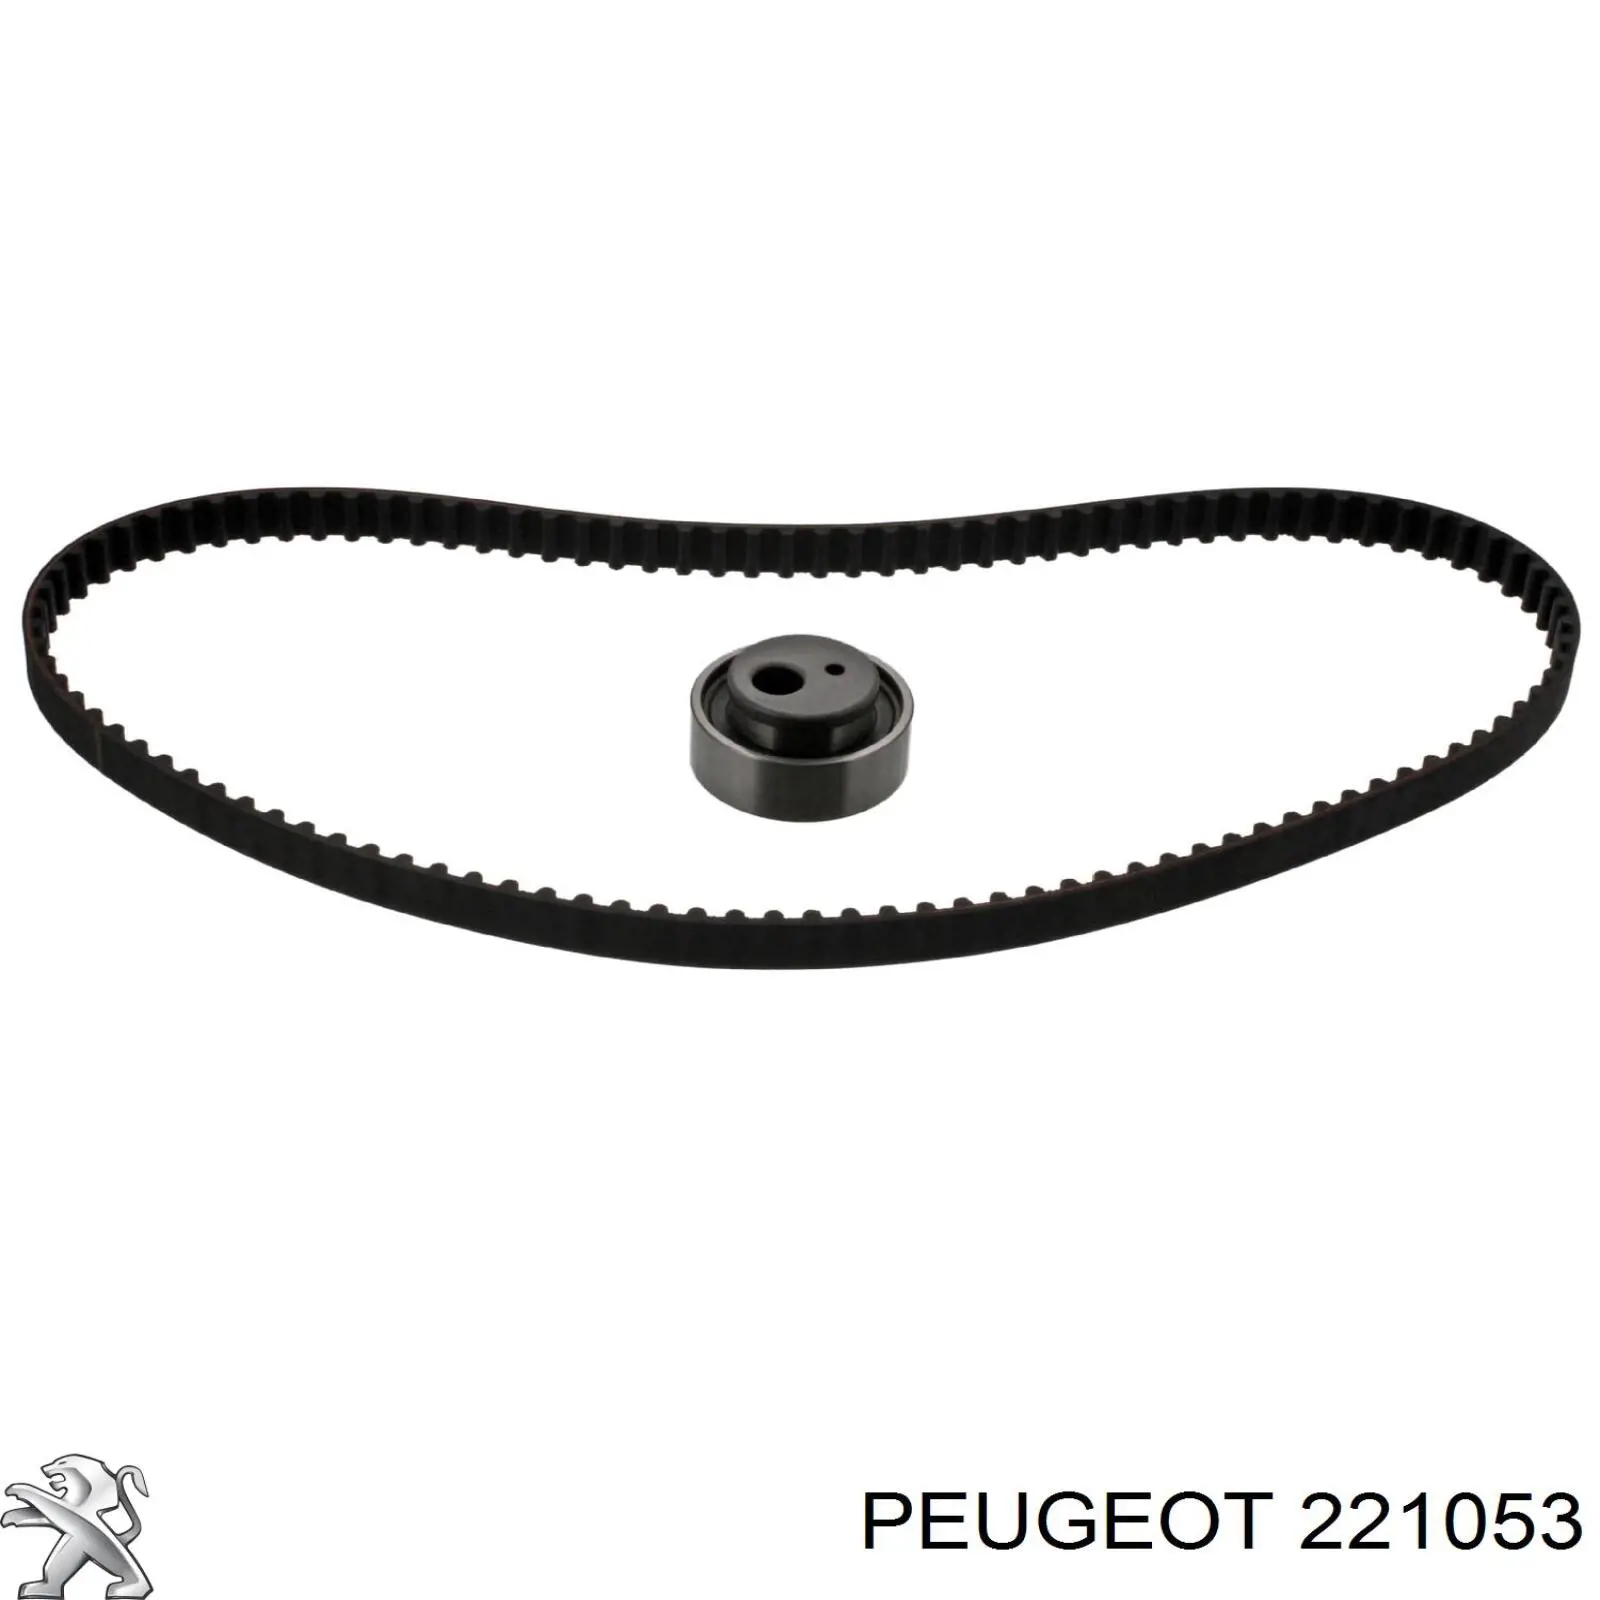 221053 Peugeot/Citroen parafuso (porca de fixação)